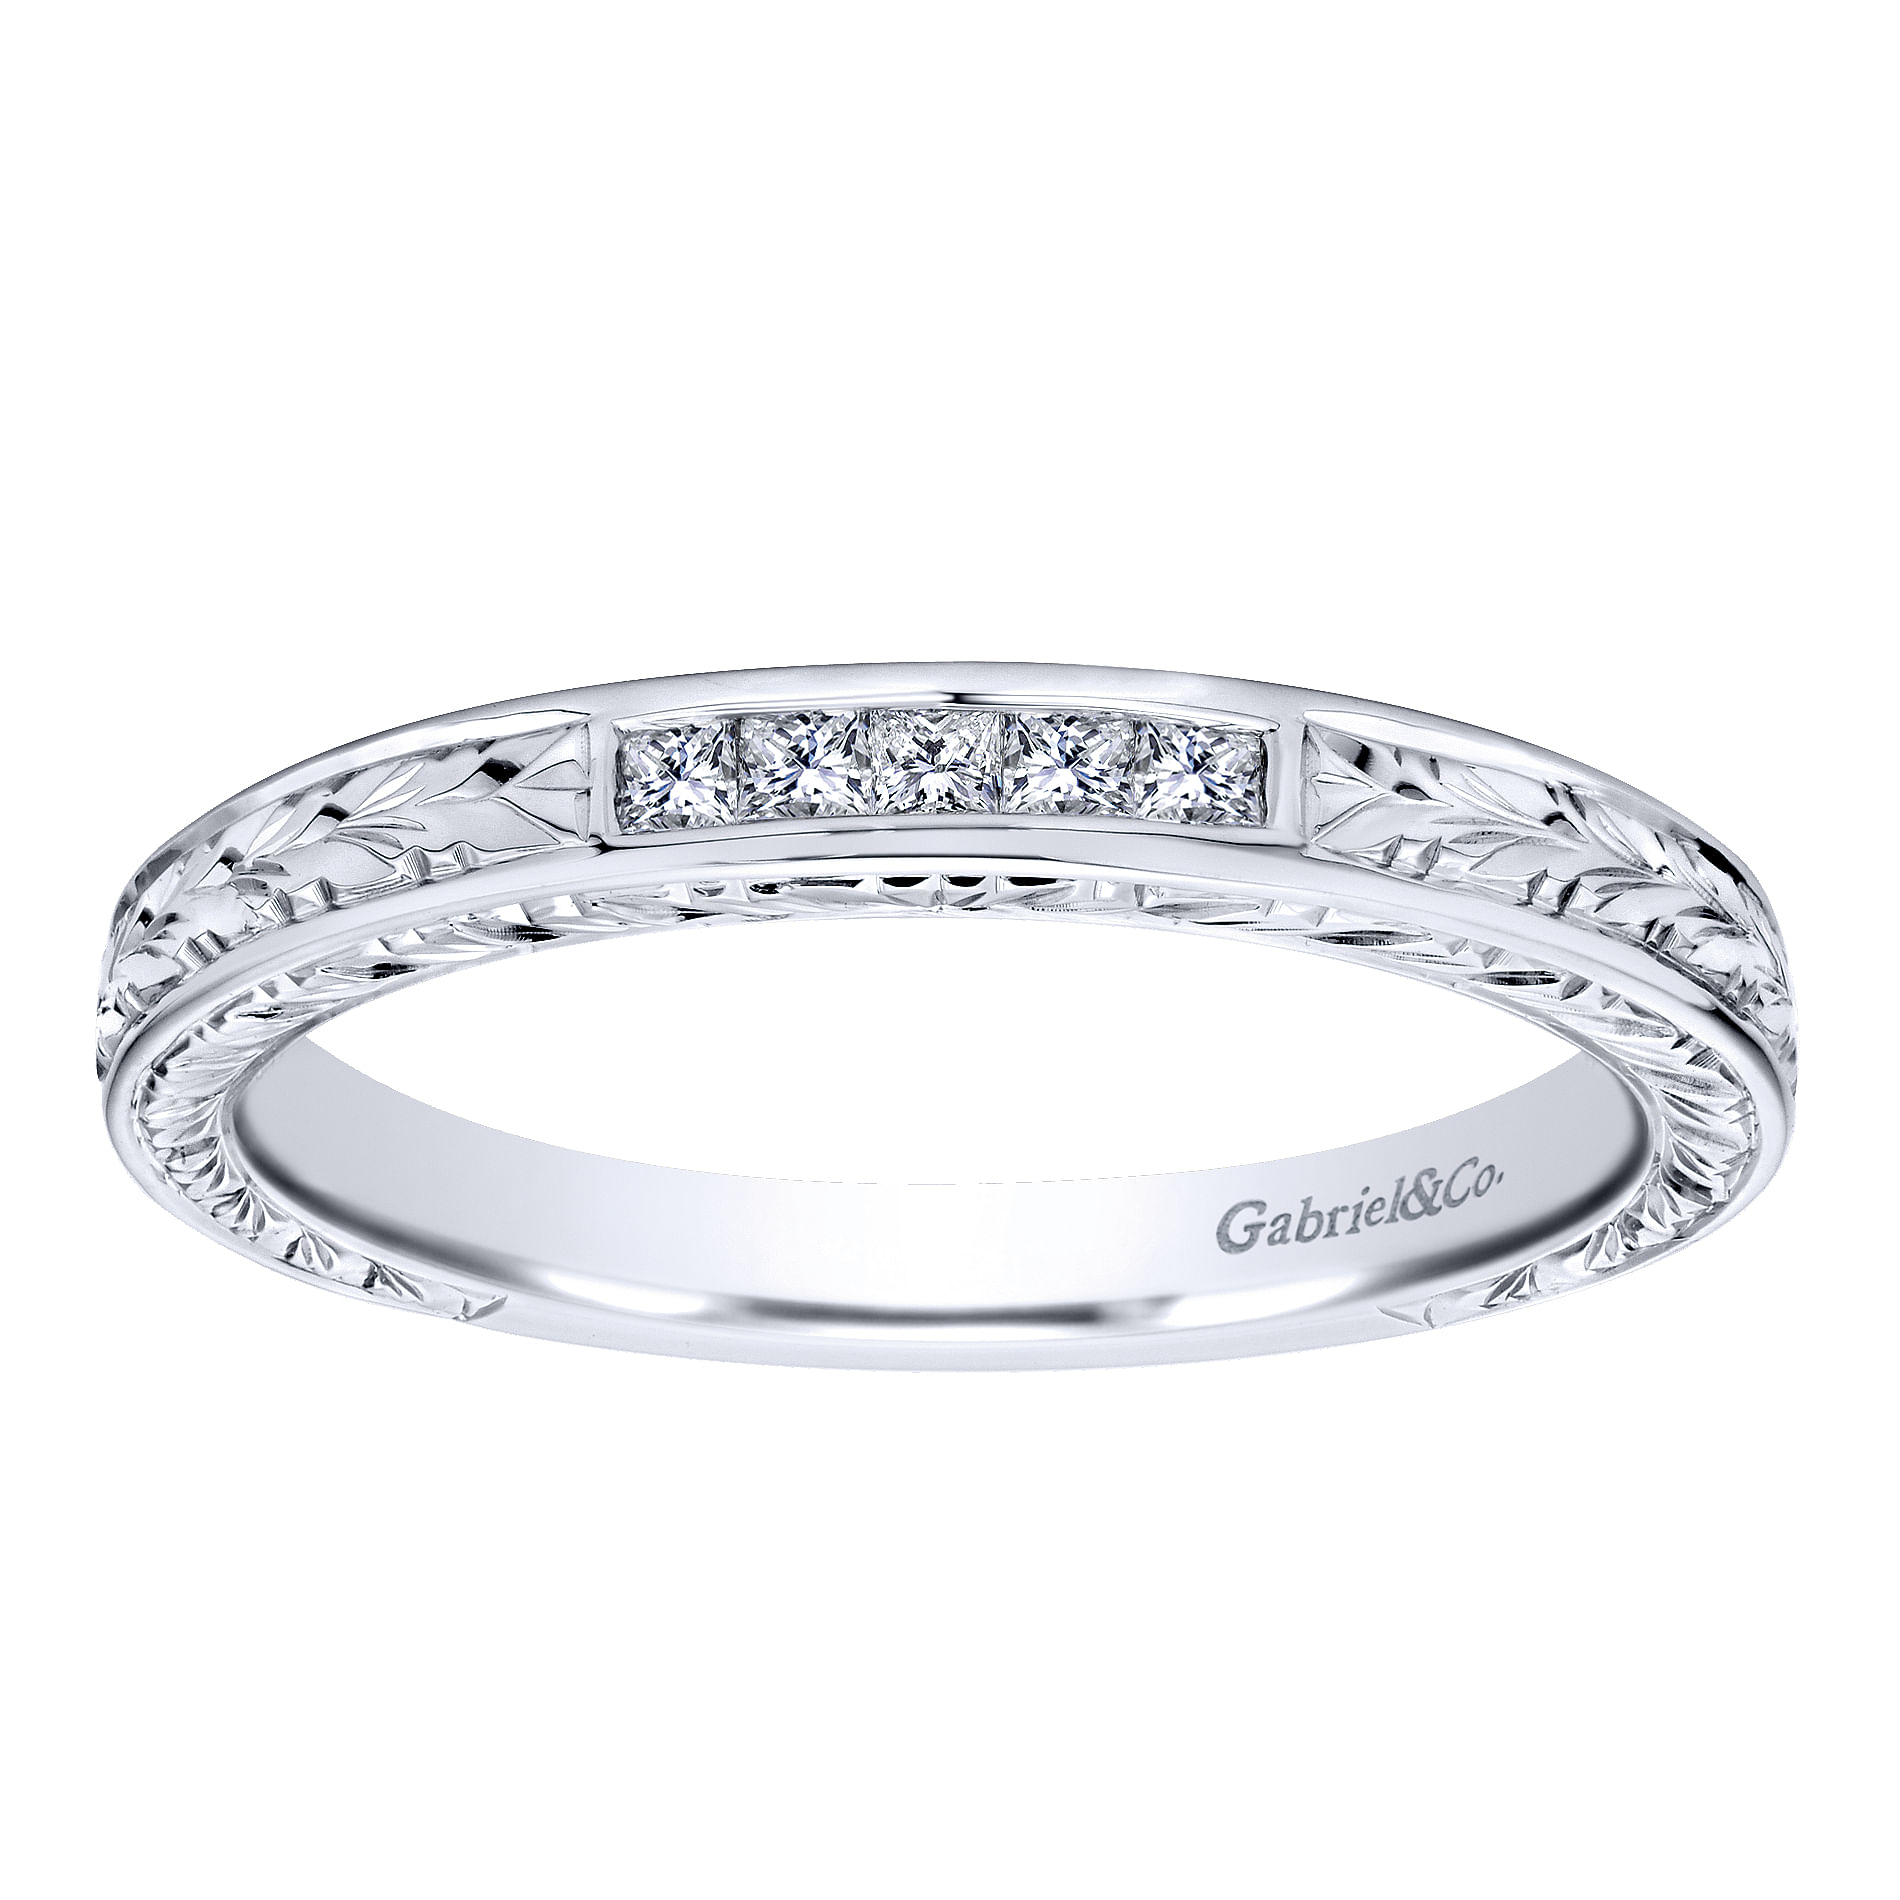 14K White Gold Princess Cut 5 Stone Channel Set Diamond Wedding Band with Engraving